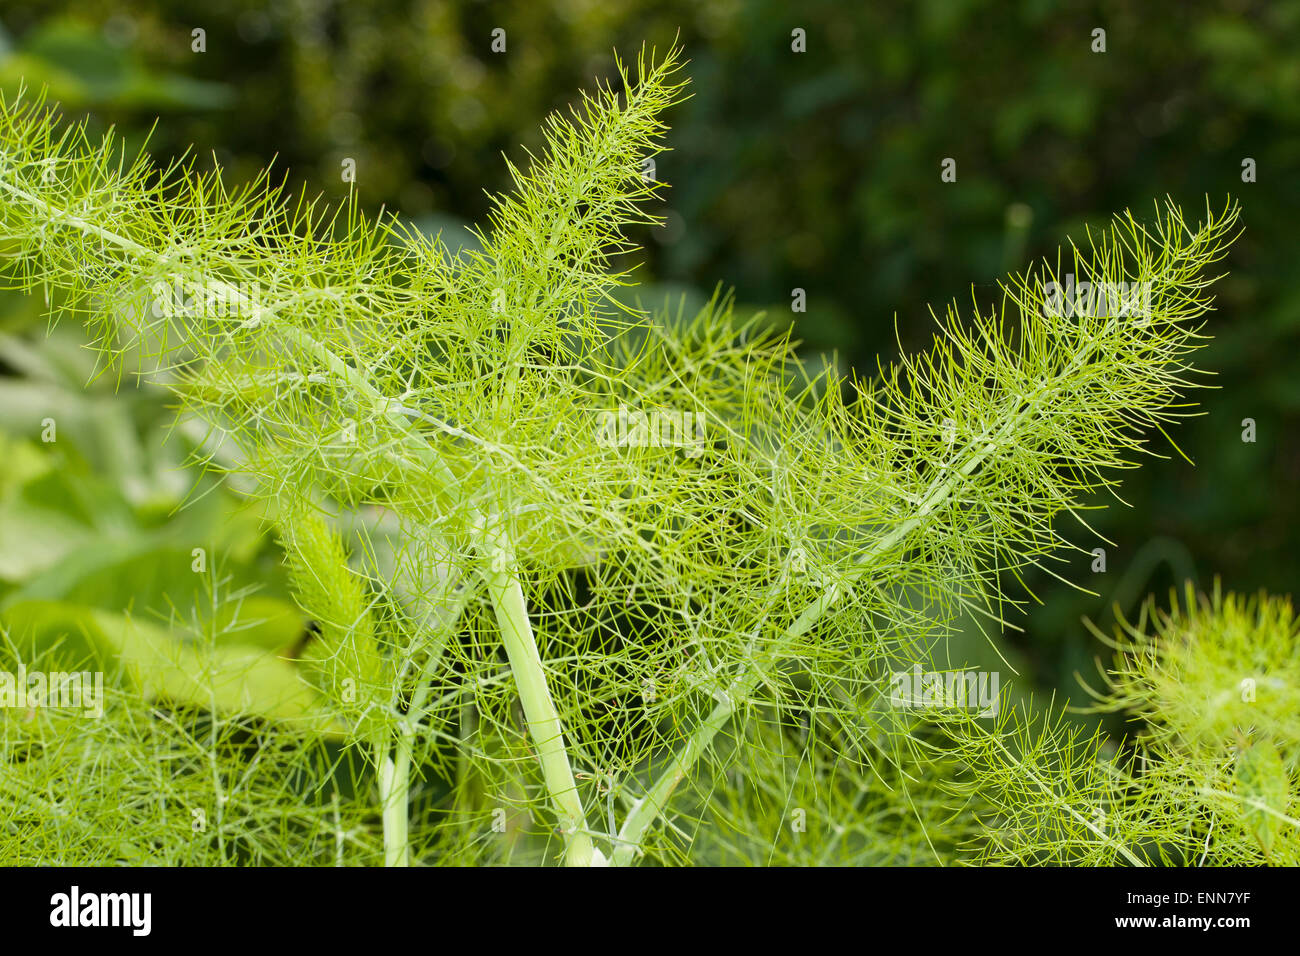 Fennel, Fenchel, Blatt, Blätter, Foeniculum vulgare, Foeniculum officinale, Le fenouil commun Stock Photo